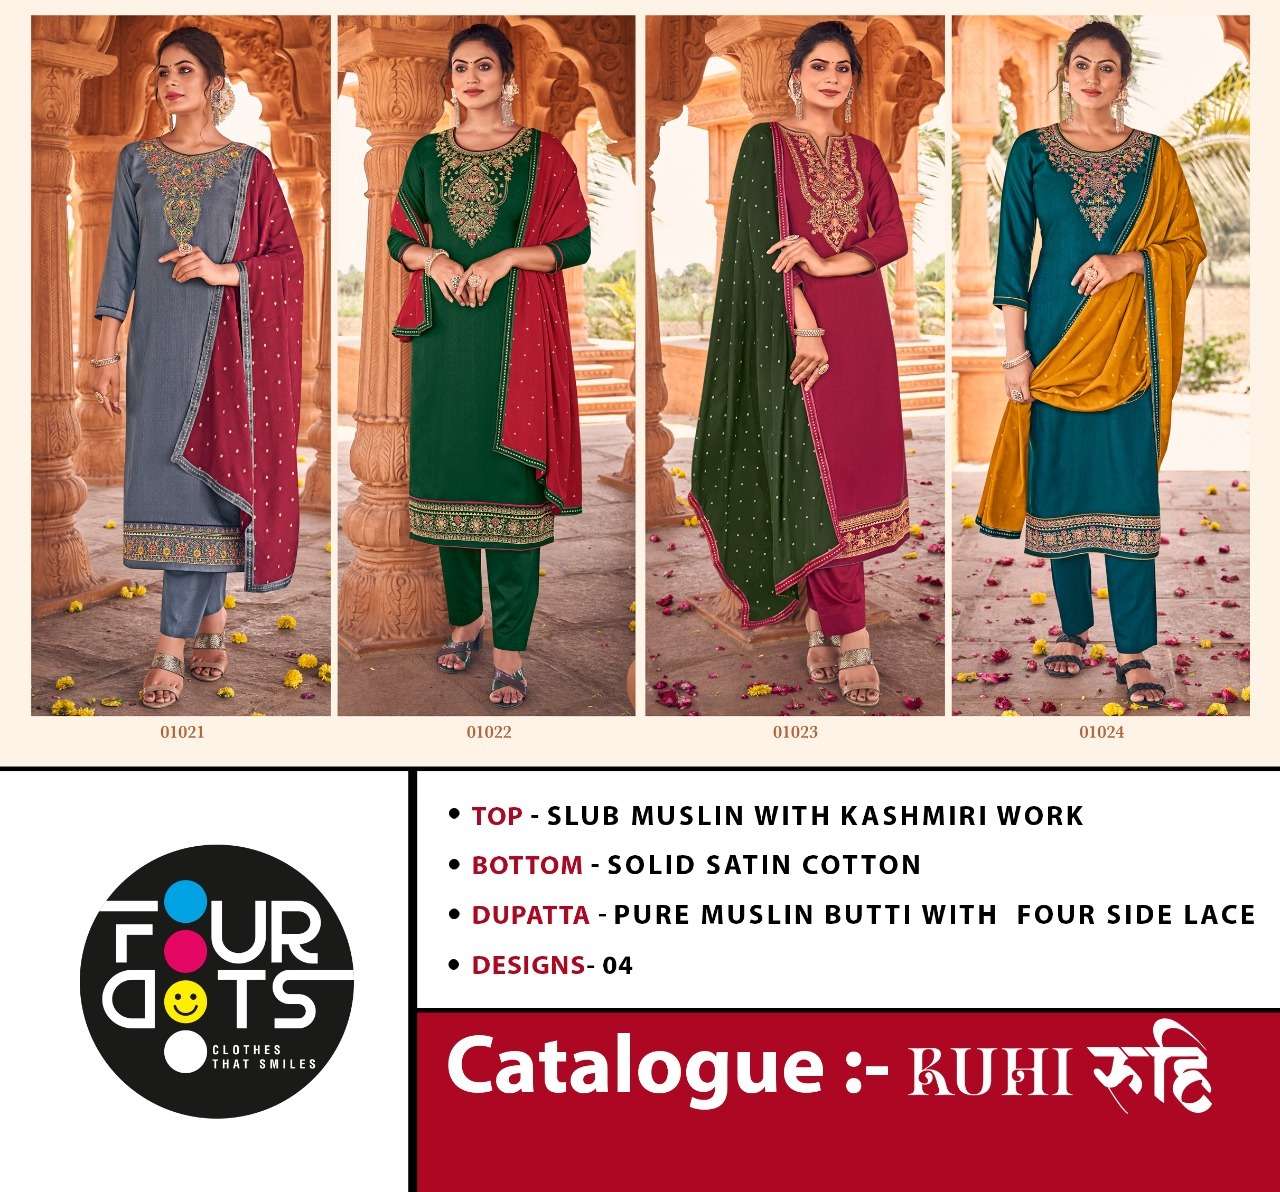 fourdots ruhi 1021-1024 series muslin with kashmiri work dress material collection surat